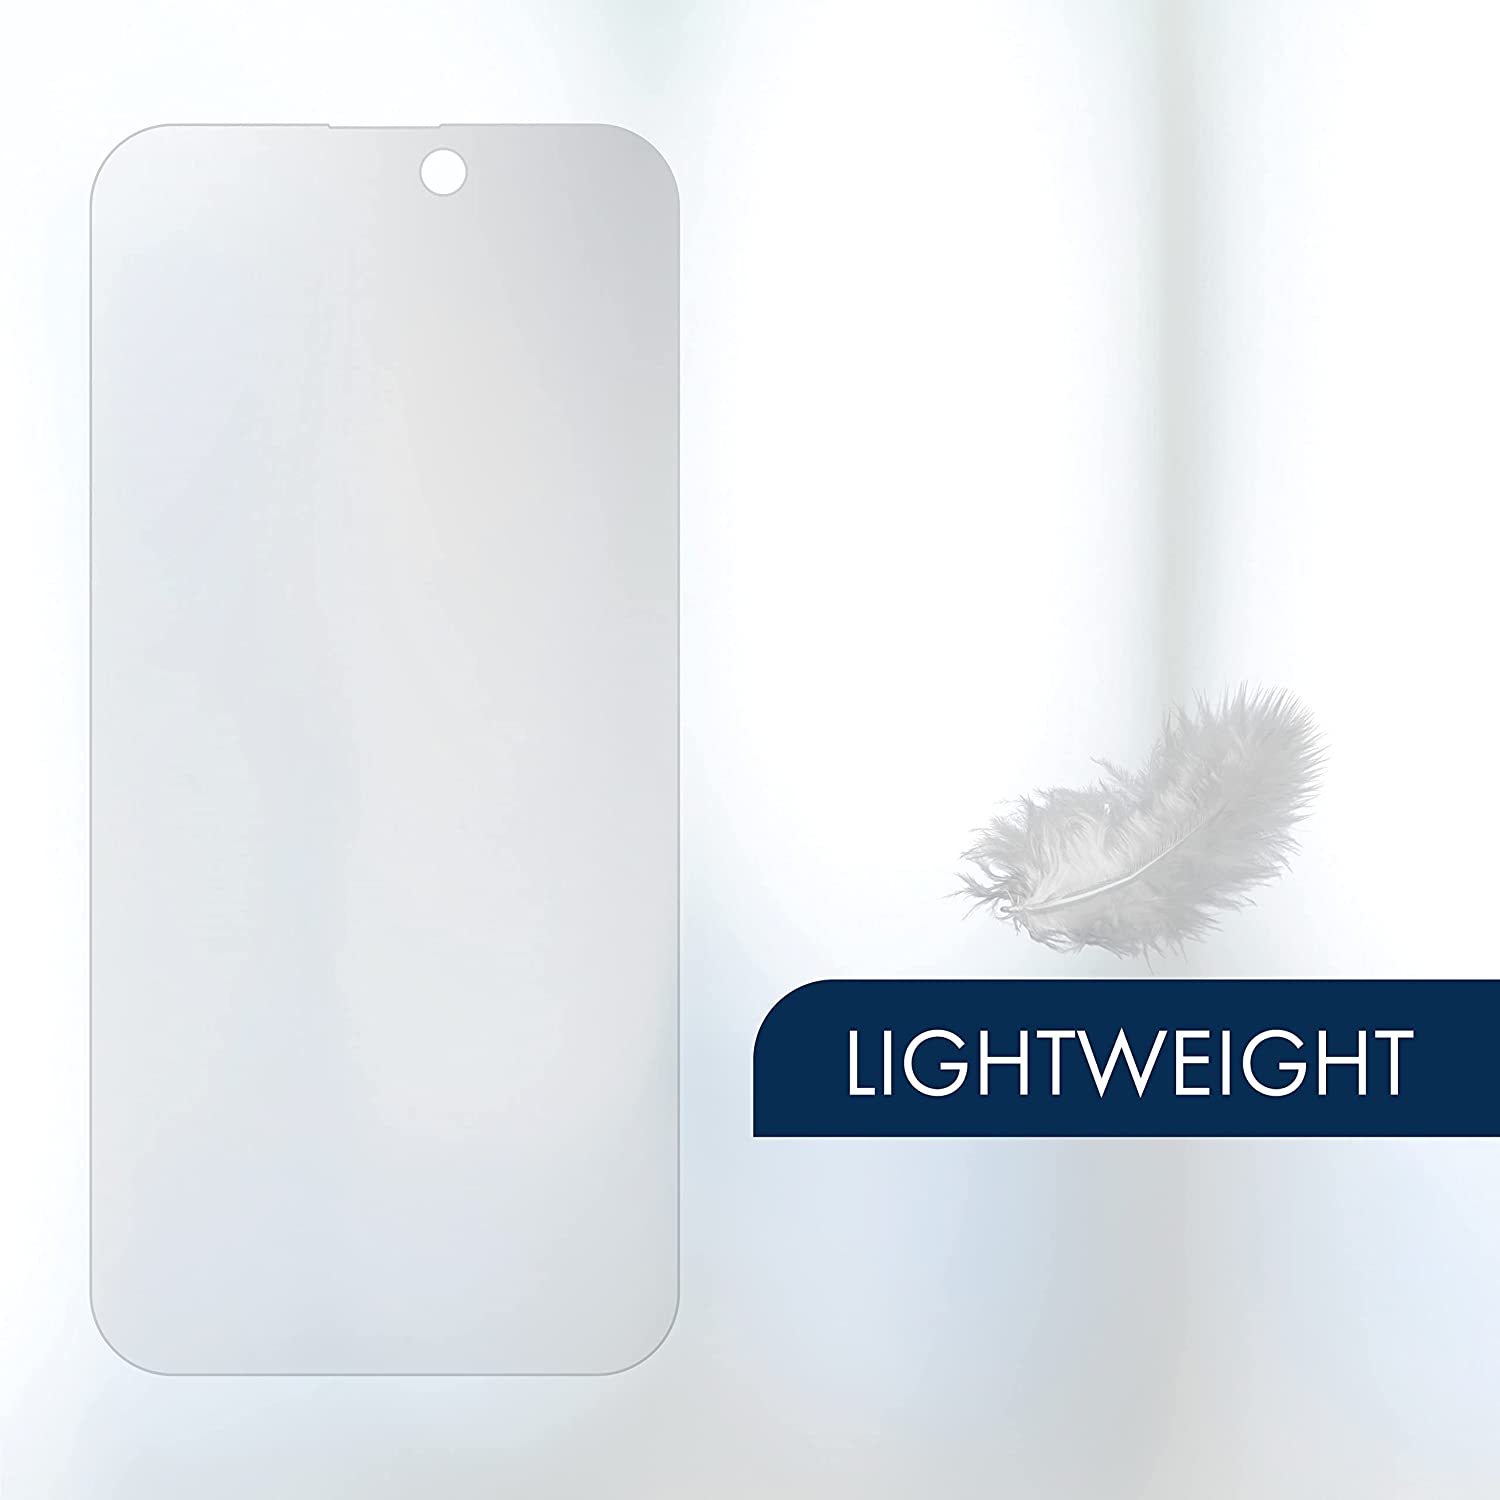 LG G Flex 2 Screen Protector + White Carbon Fiber Skin Protector